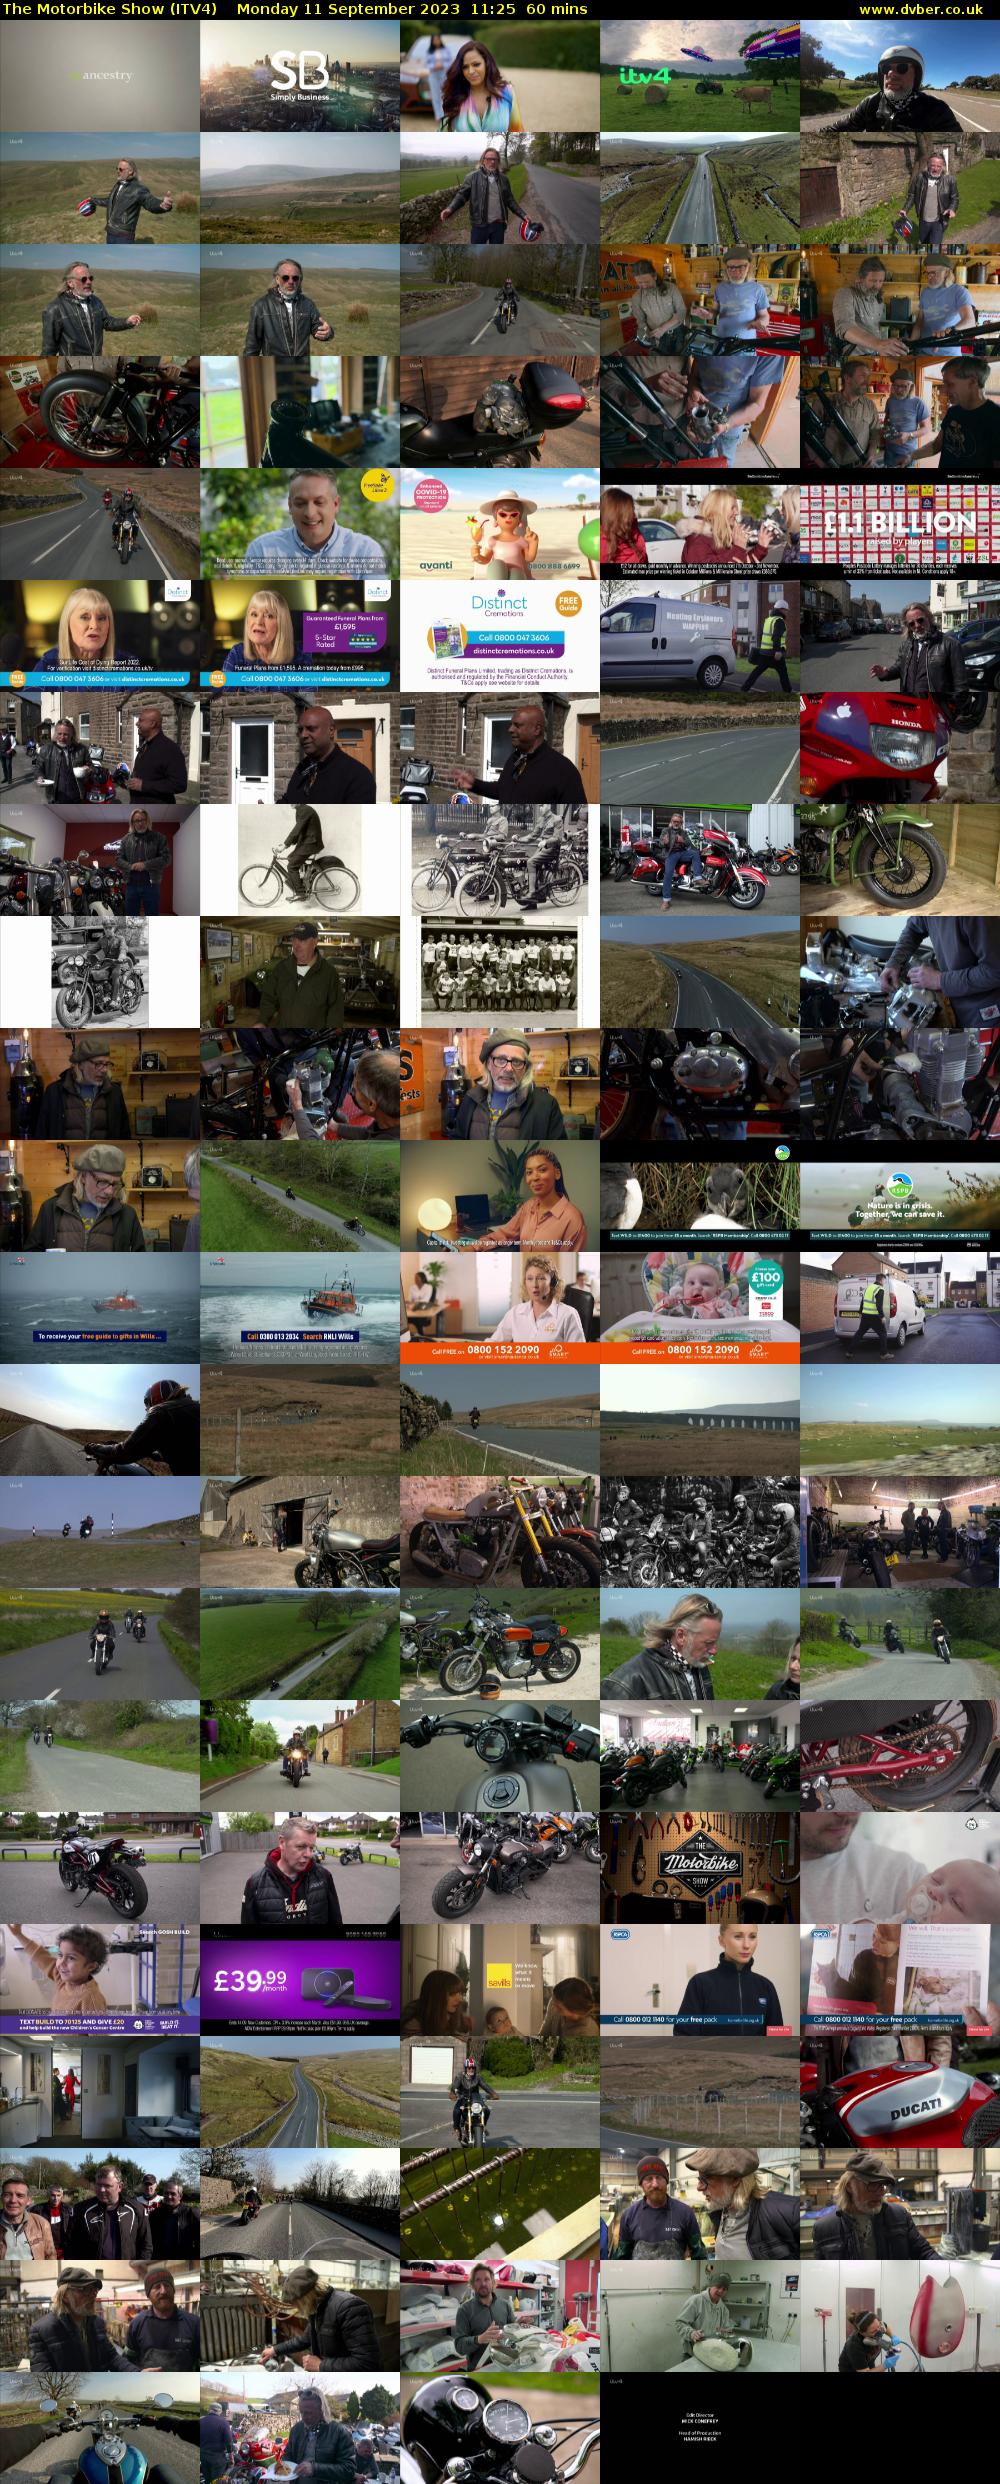 The Motorbike Show (ITV4) Monday 11 September 2023 11:25 - 12:25